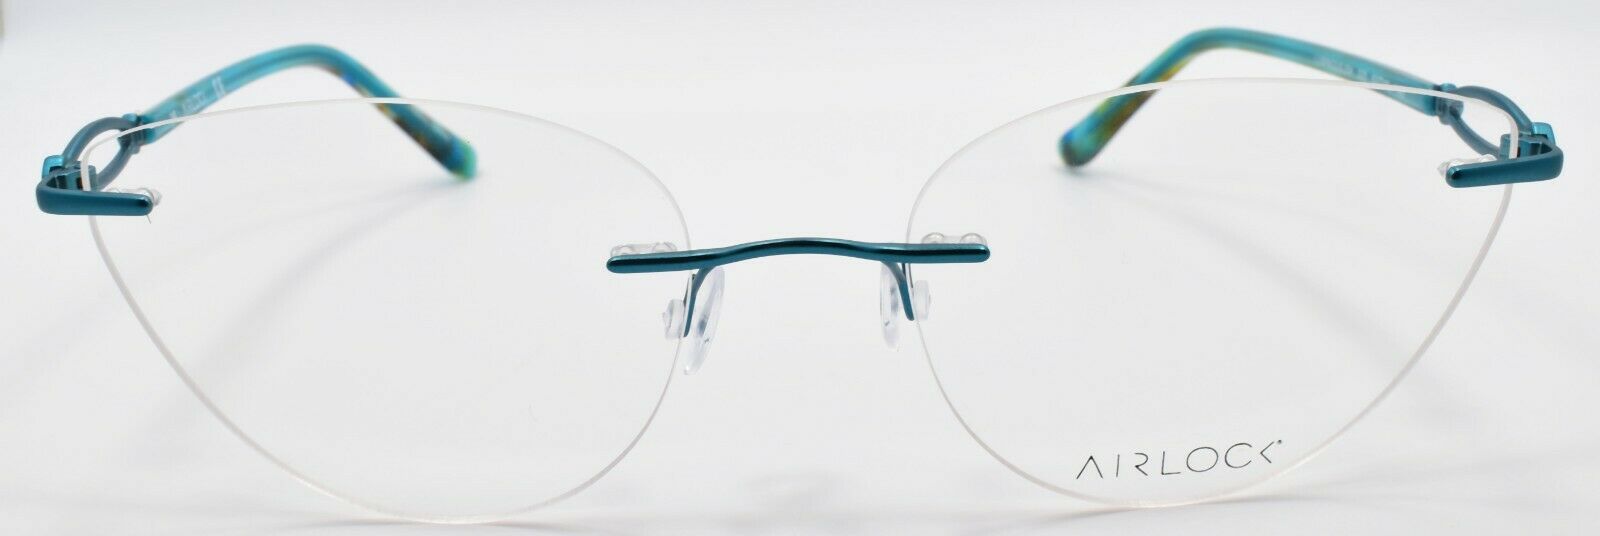 2-Airlock Luminous 204 320 Women's Eyeglasses Frames Rimless 53-18-140 Teal-886895305402-IKSpecs